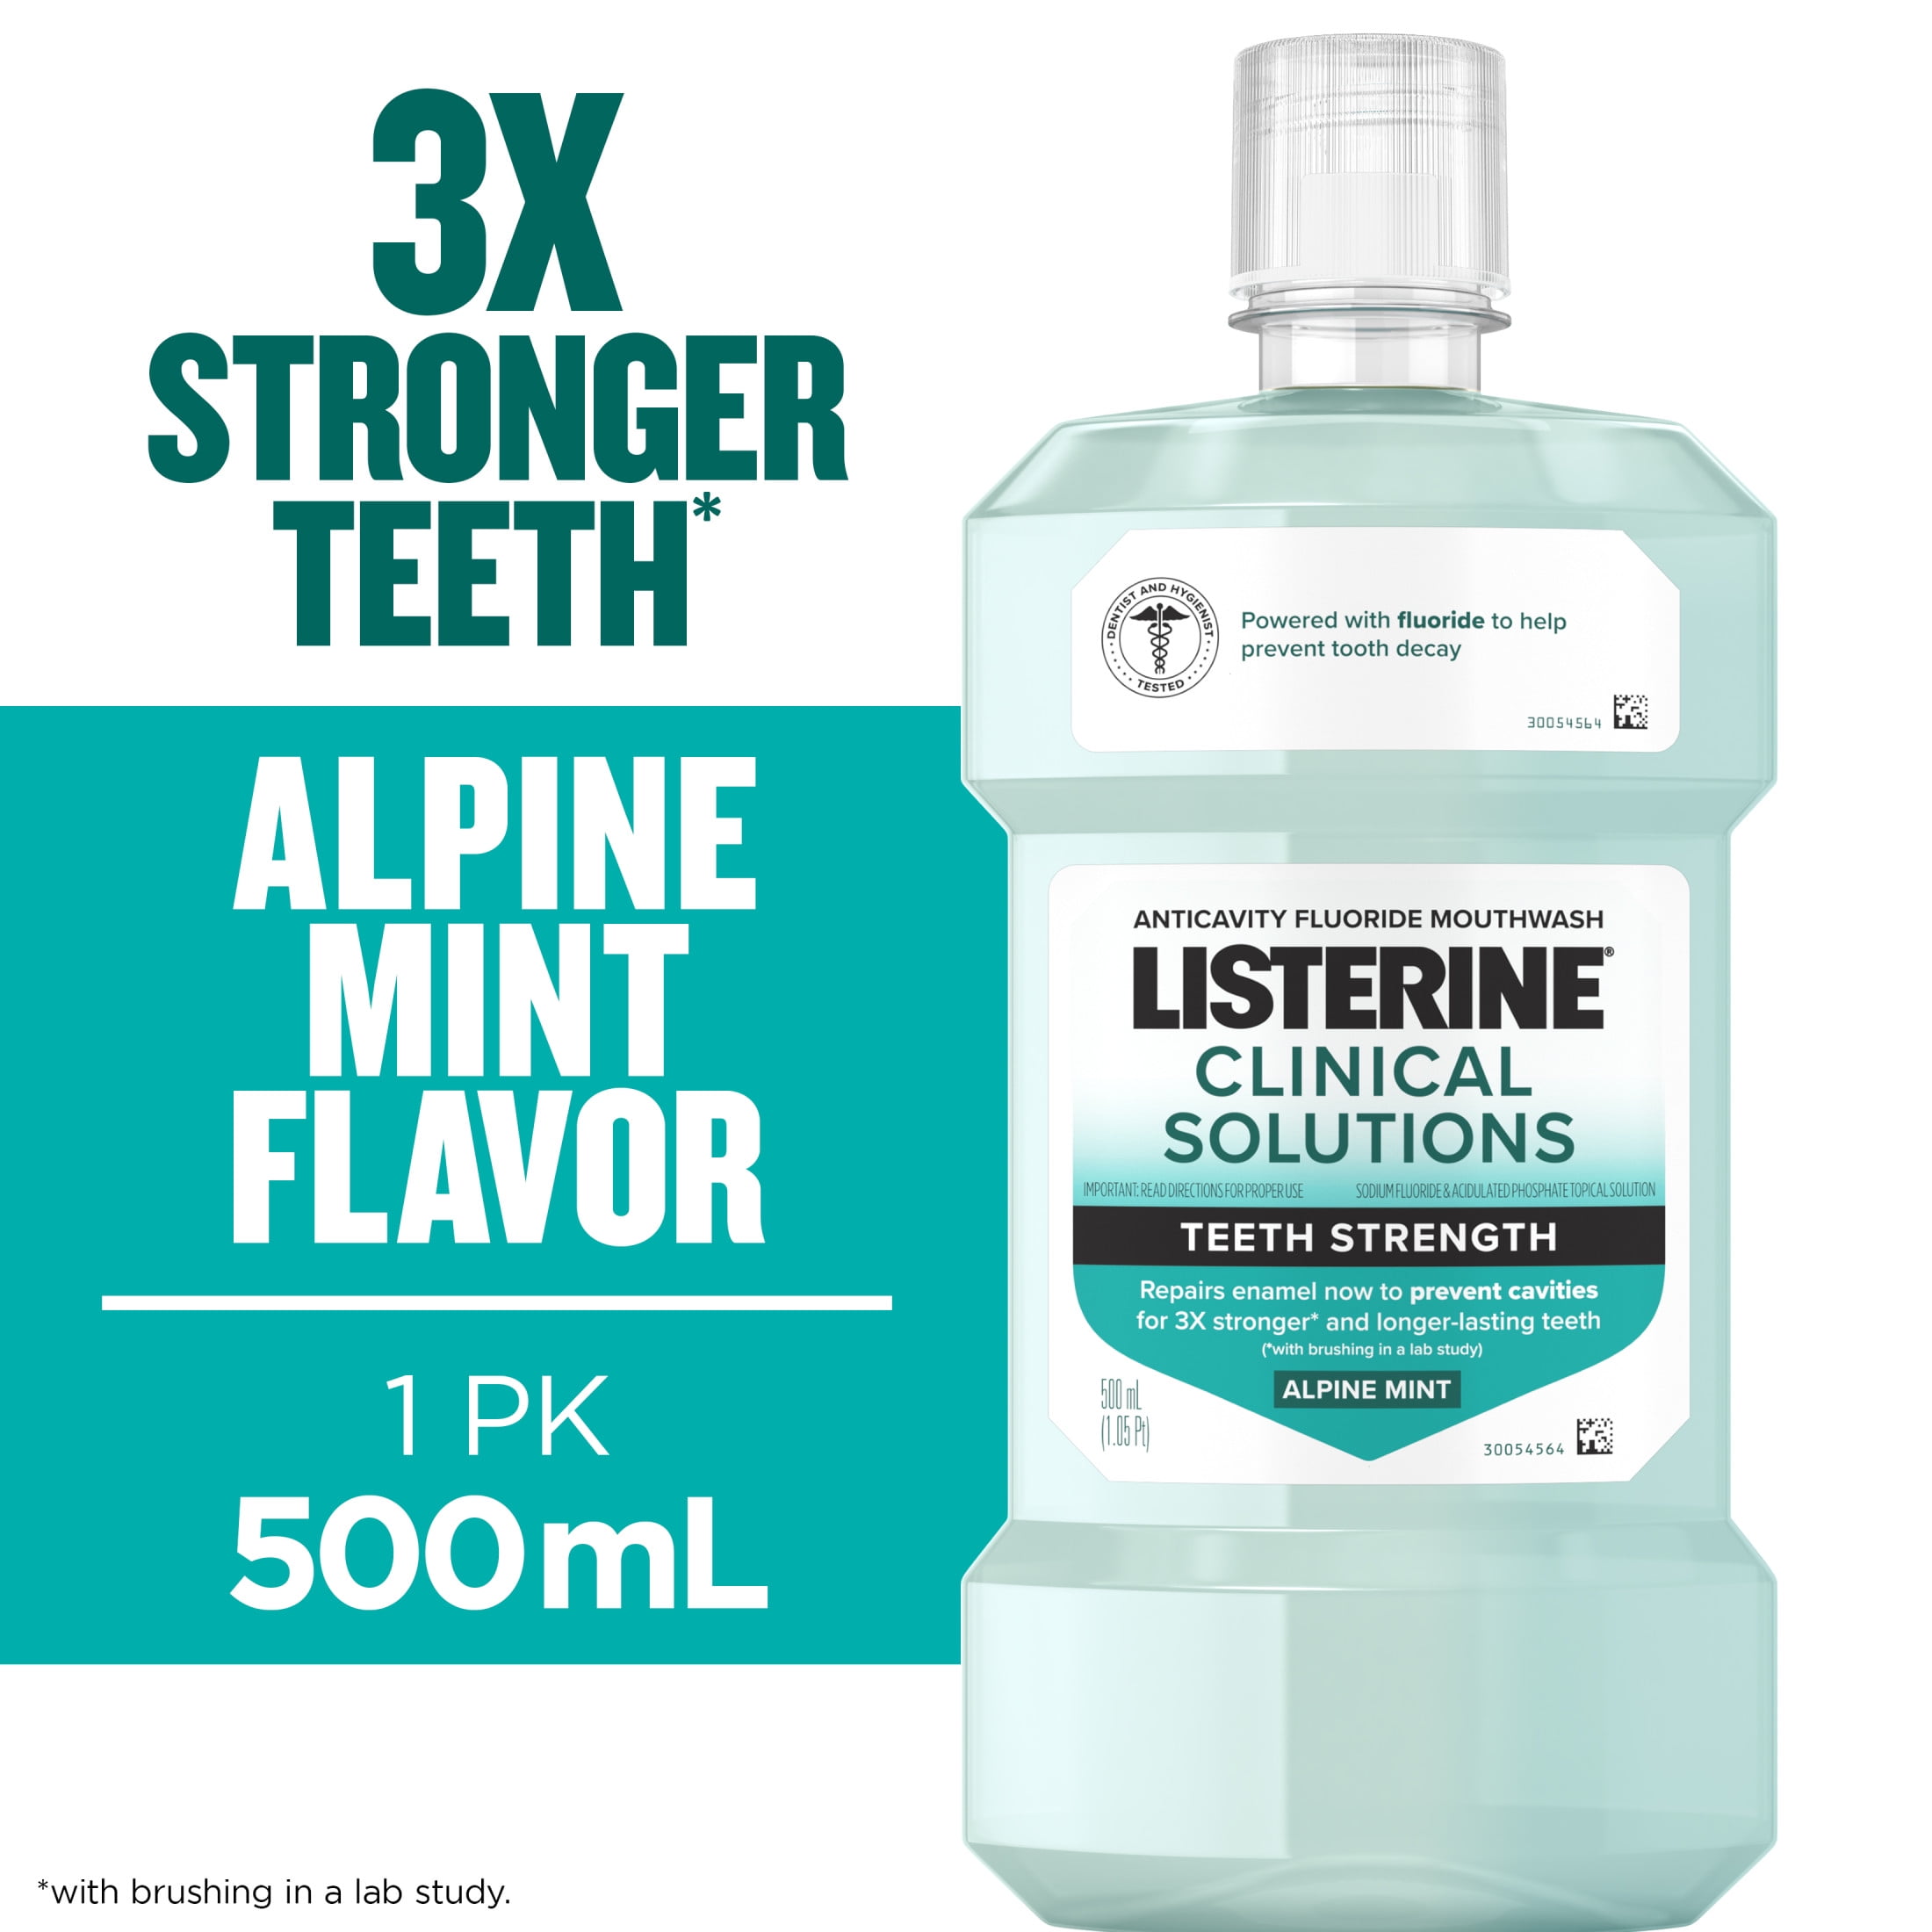 Listerine Clinical Solutions Teeth Strength Anticavity Fluoride